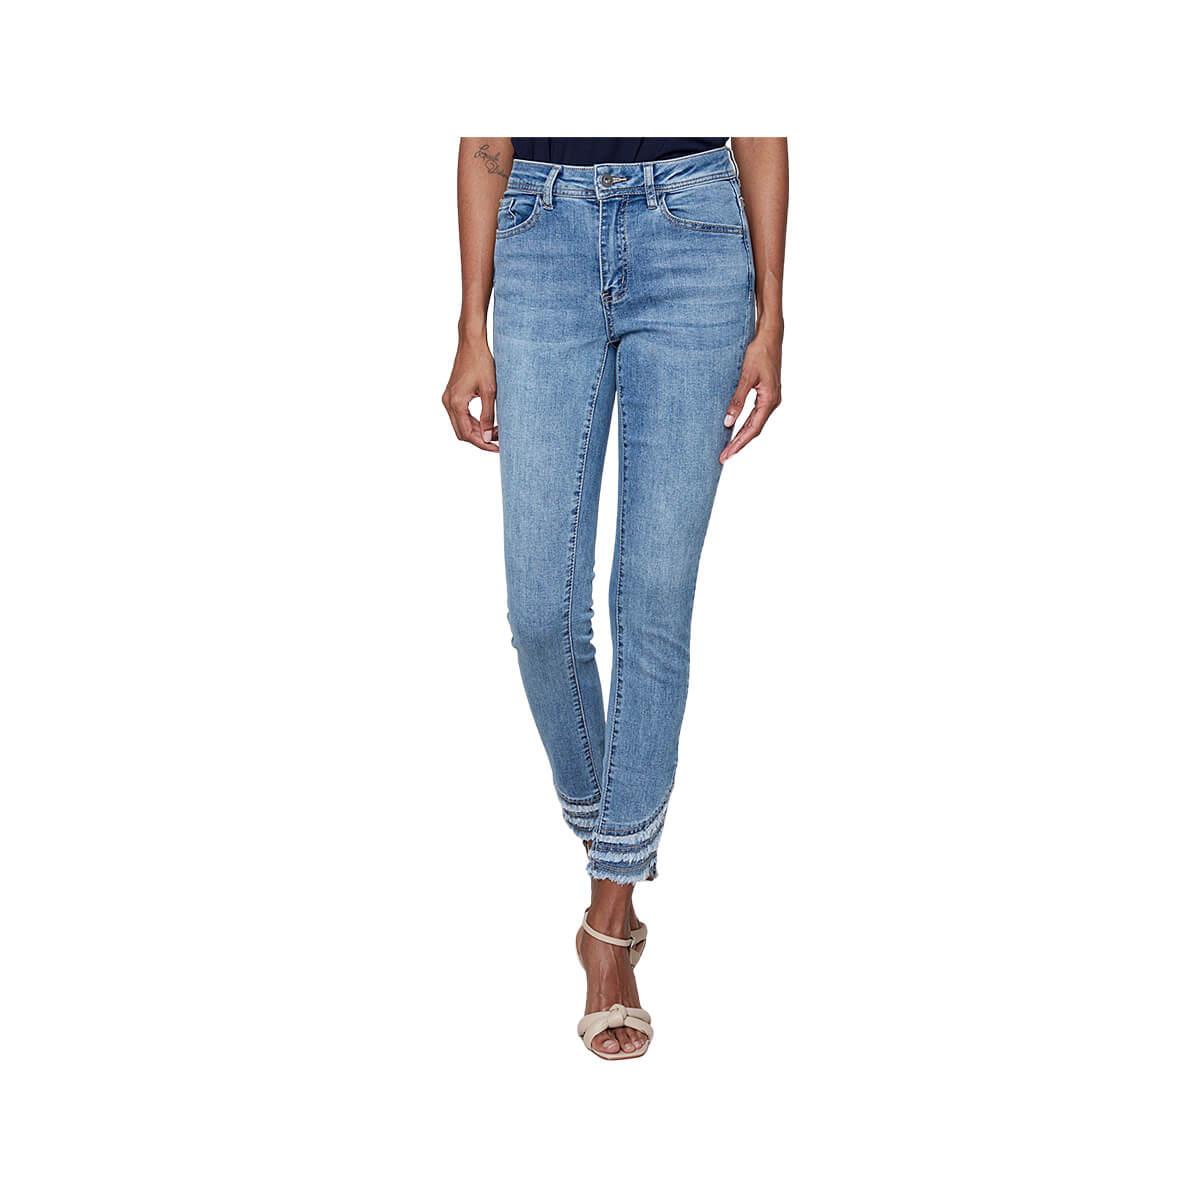 Women's Fit 2 5-pocket Colored Denim Slim Ankle Jeans from Lands